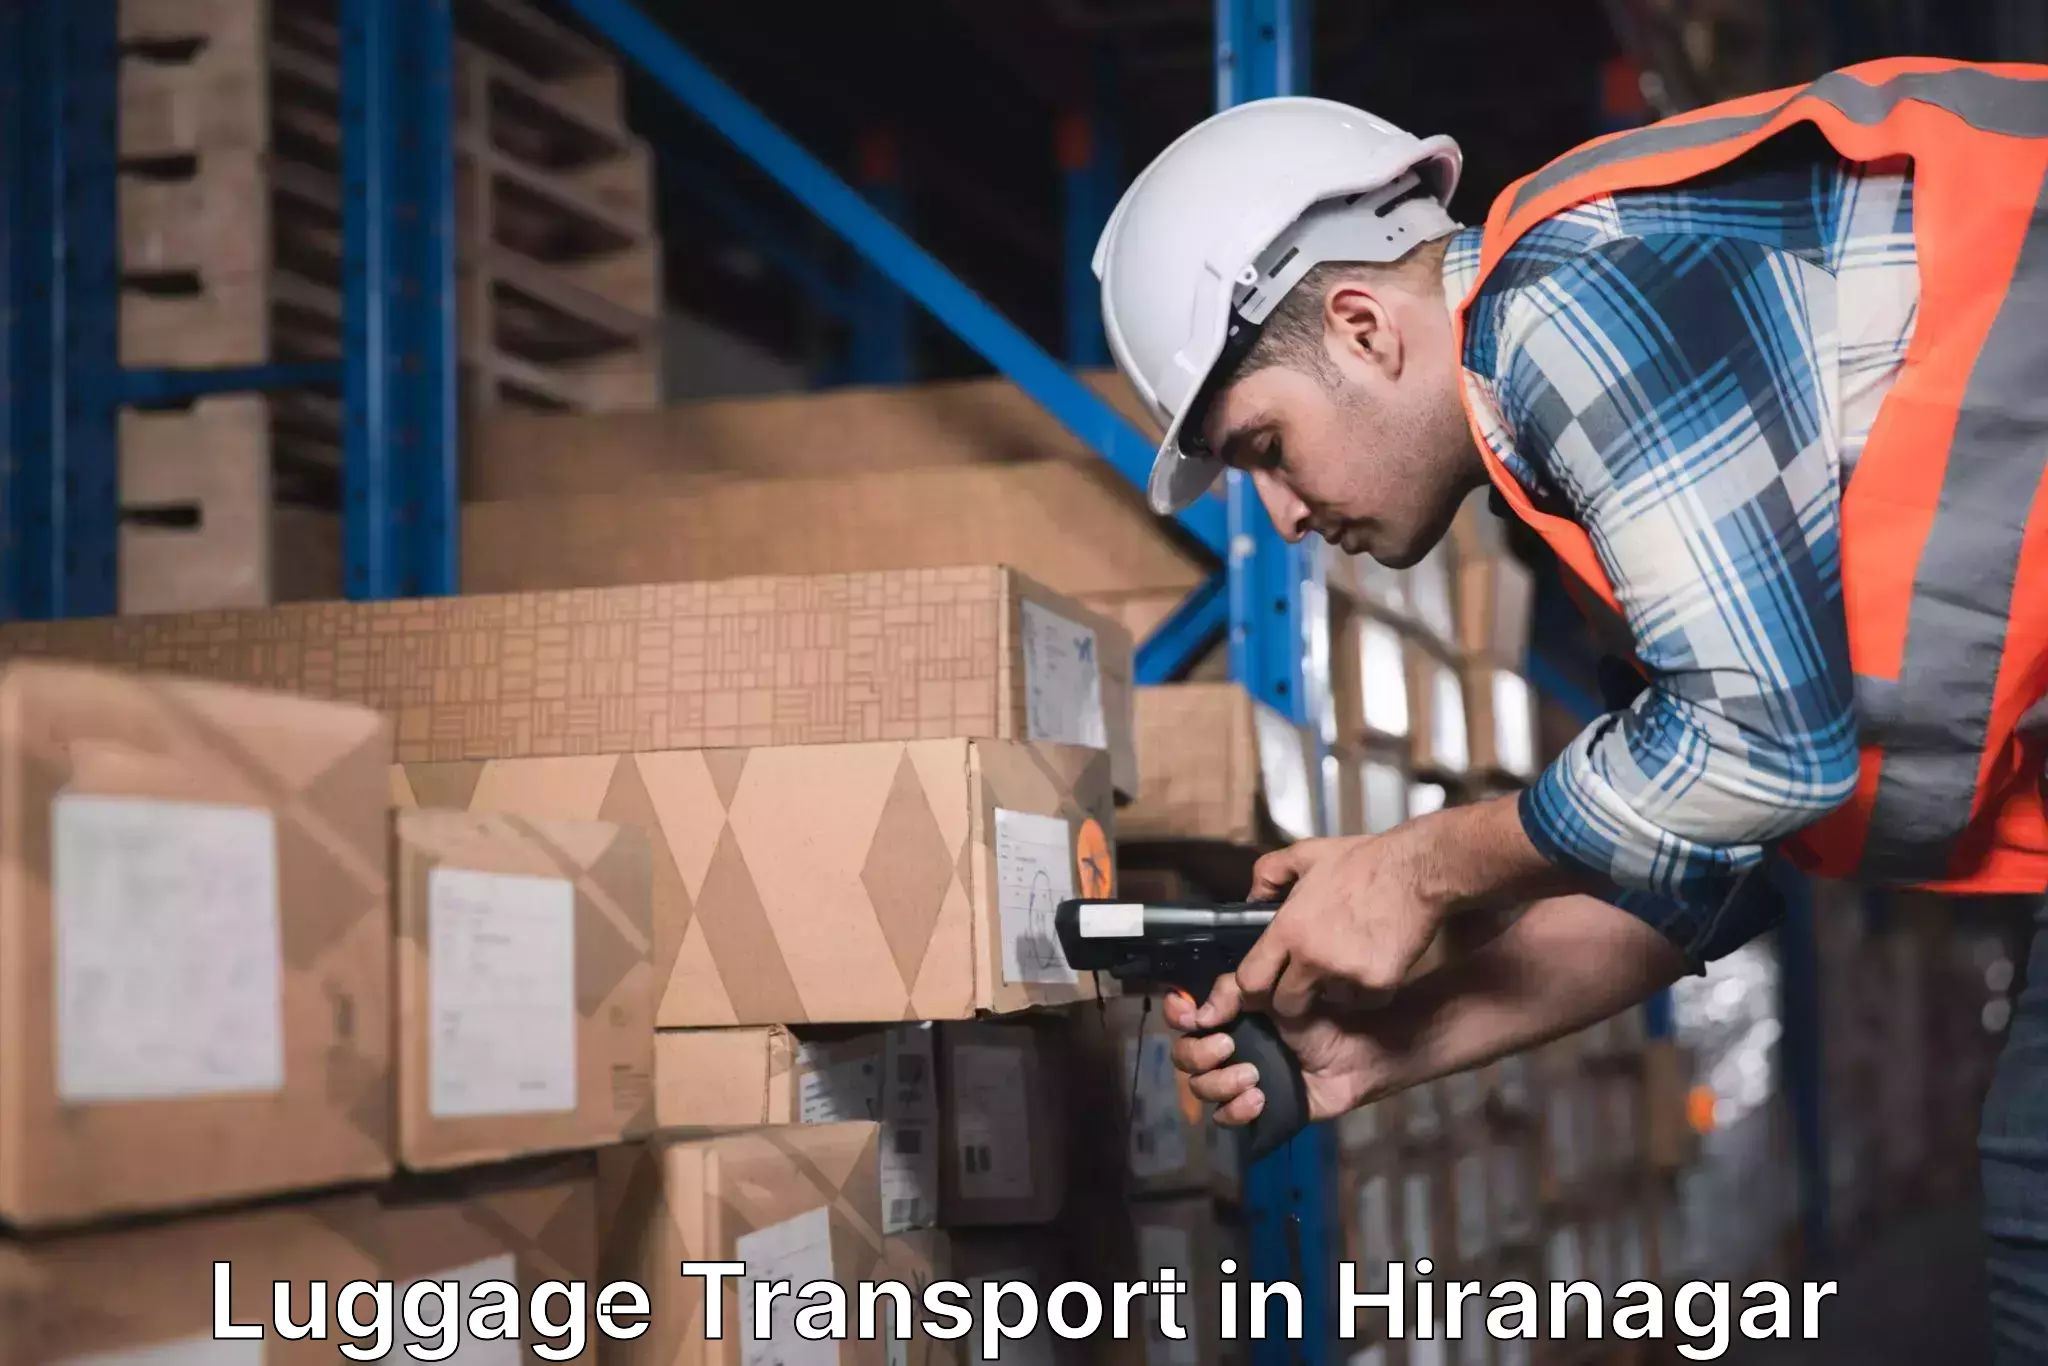 Luggage delivery providers in Hiranagar